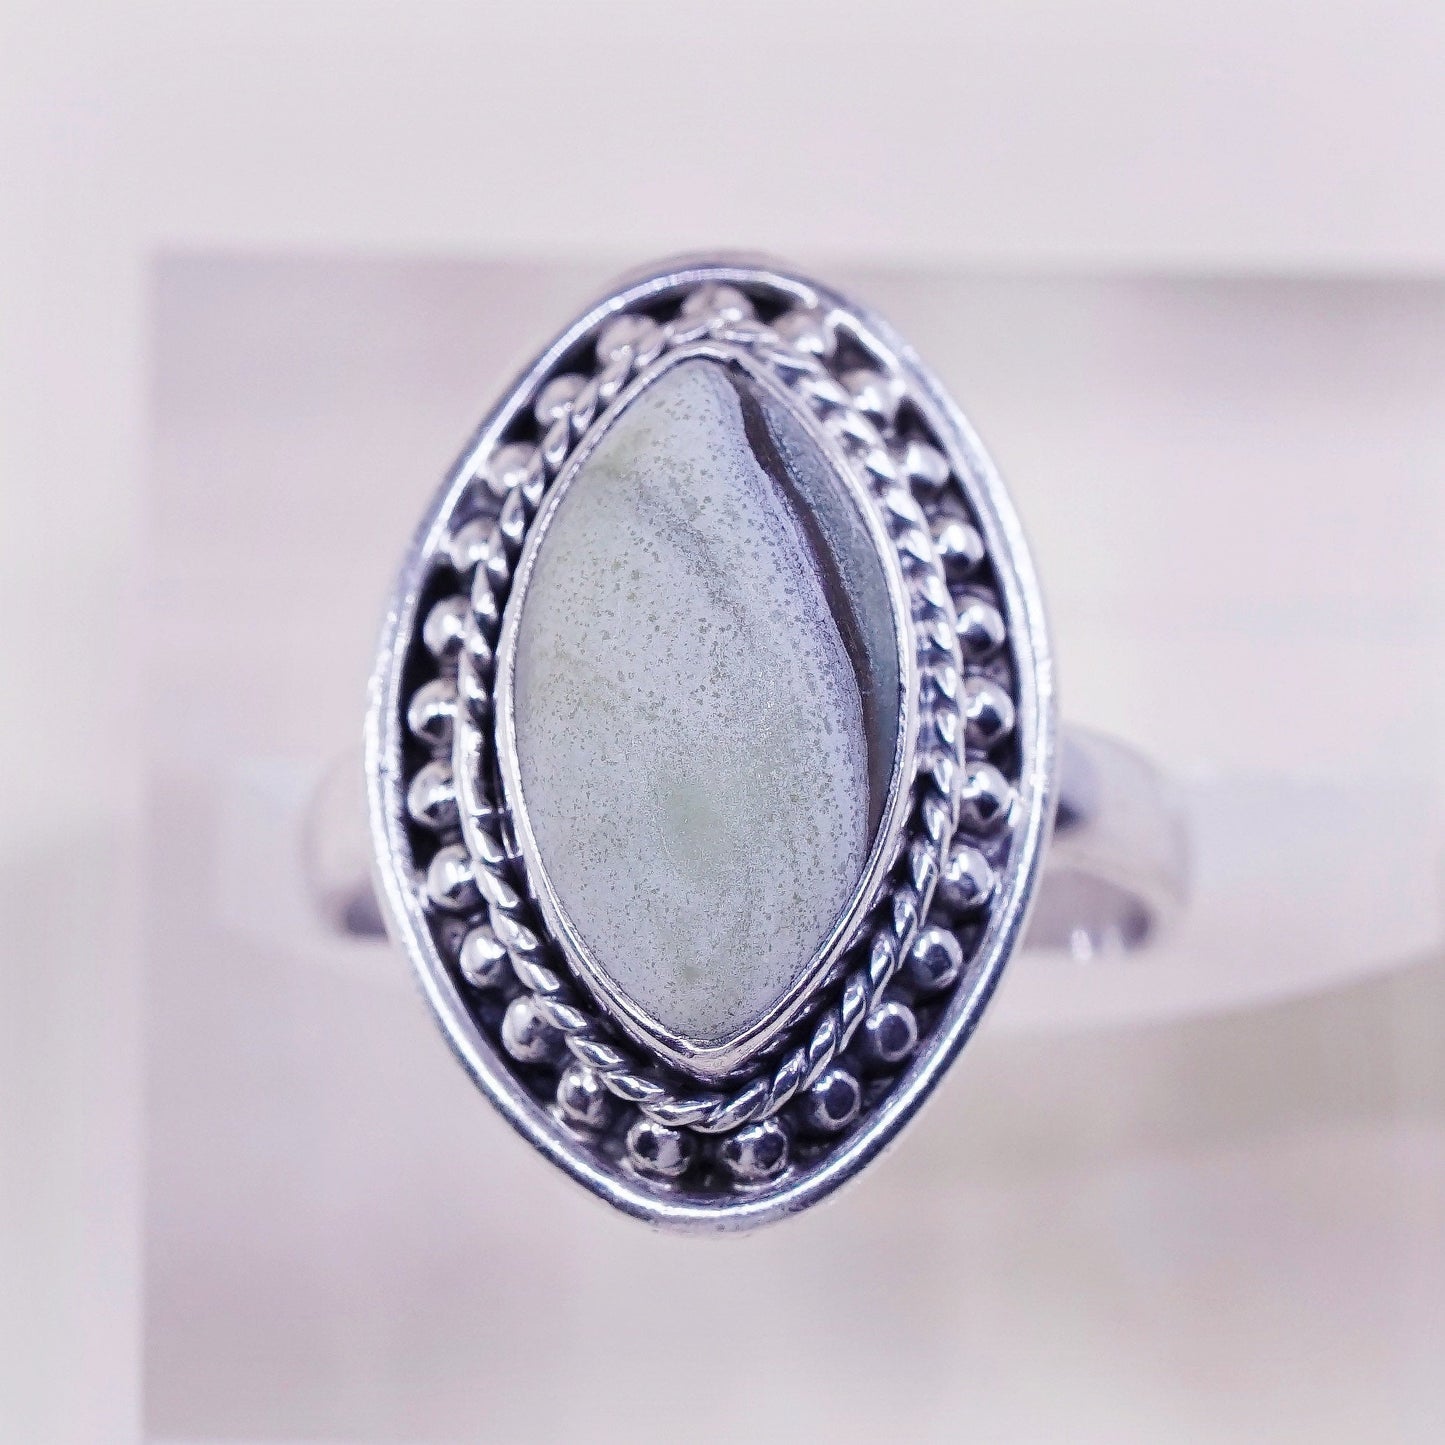 Size 7.5, vtg Southwestern sterling 925 silver handmade ring w/ agate N beads